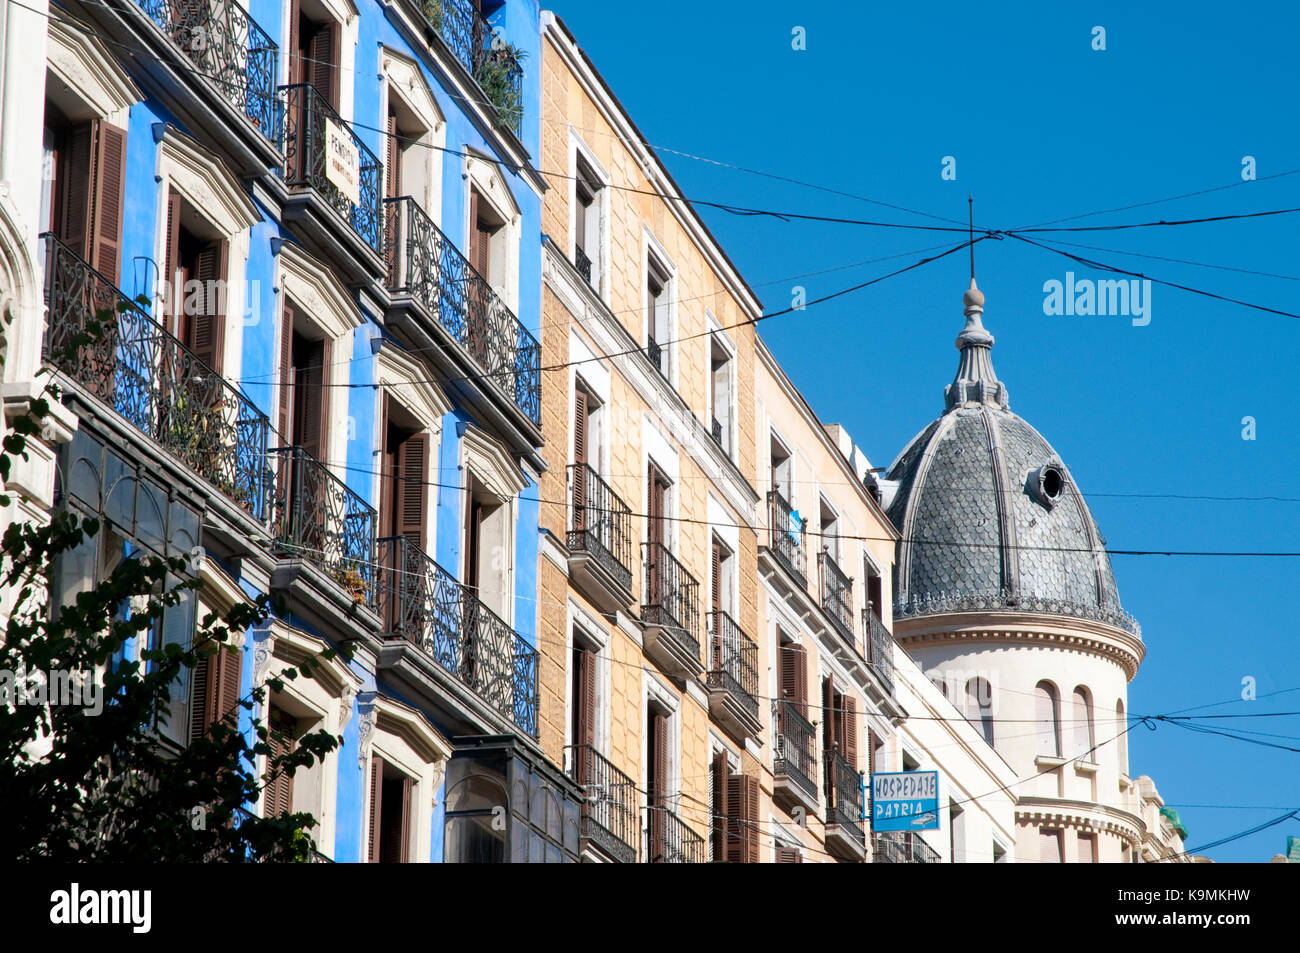 Facades of buildings. Mayor street, Madrid, Spain. Stock Photo